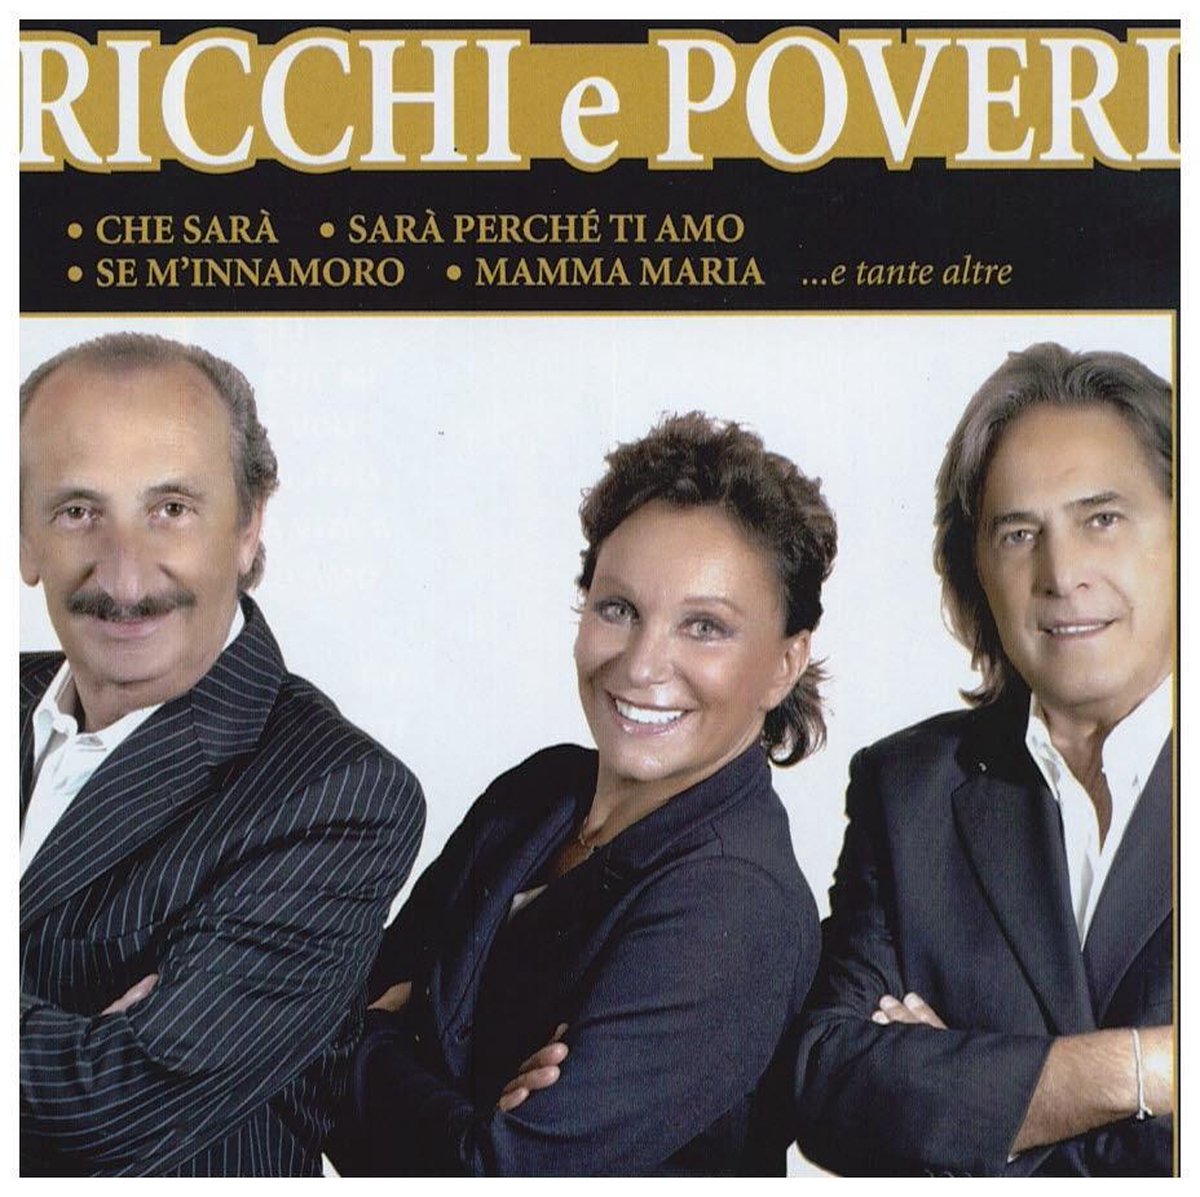 Рикке э повери песни. Группа Ricchi e Poveri альбомы. Ricchi e Poveri Постер. Обложка CD диска Ricchi e Poveri mamma Maria. Трио Рики э повери диск.